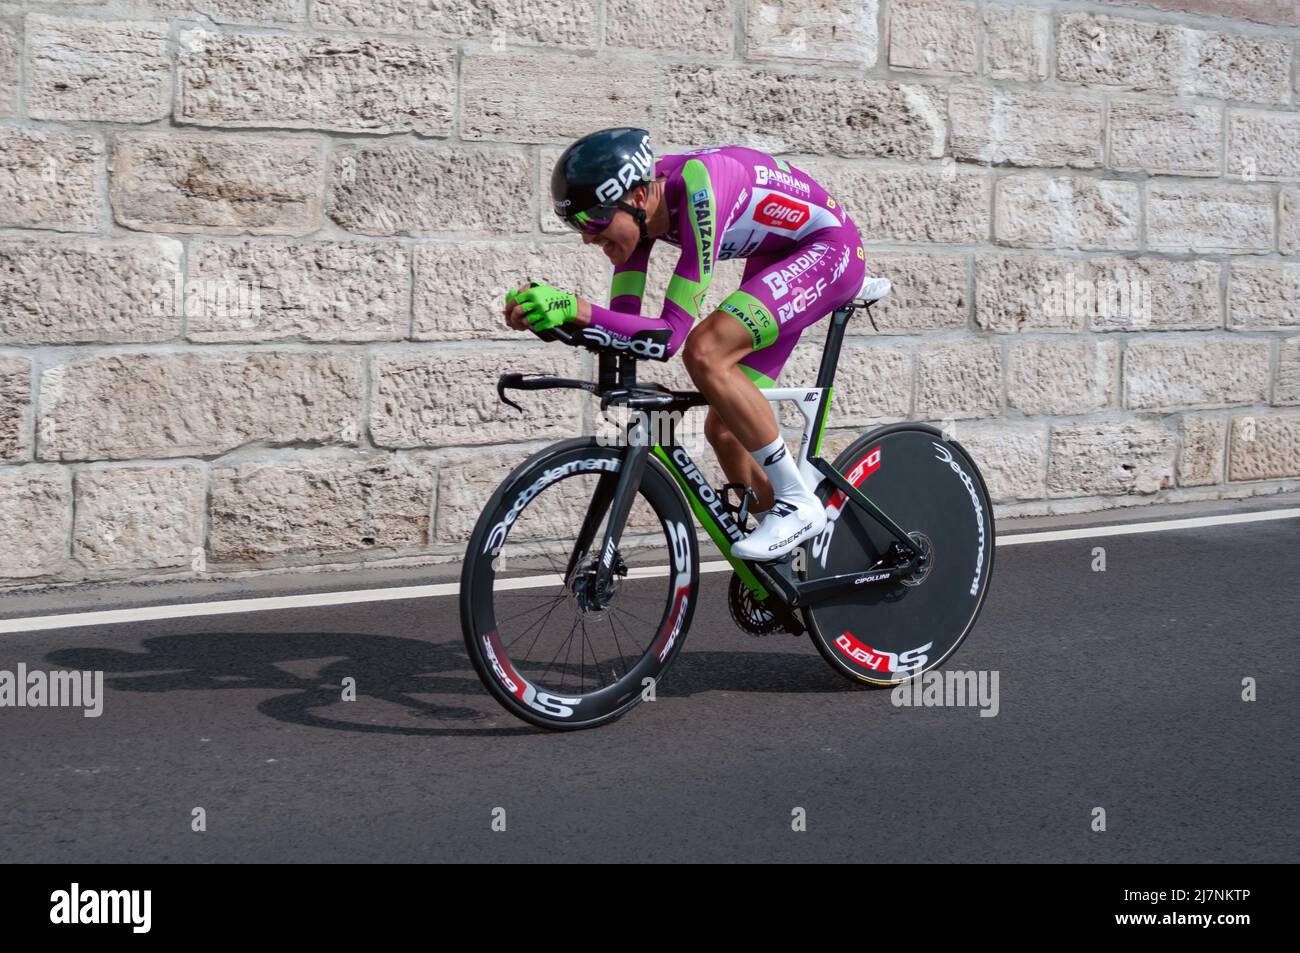 BUDAPEST, UNGARN - 07. MAI 2022: Profi-Radfahrer Luca Covili BARDIANI CSF FAIZANE' Giro D'Italia Etappe 2 Zeitfahren - Radrennen am 07. Mai 2022 Stockfoto